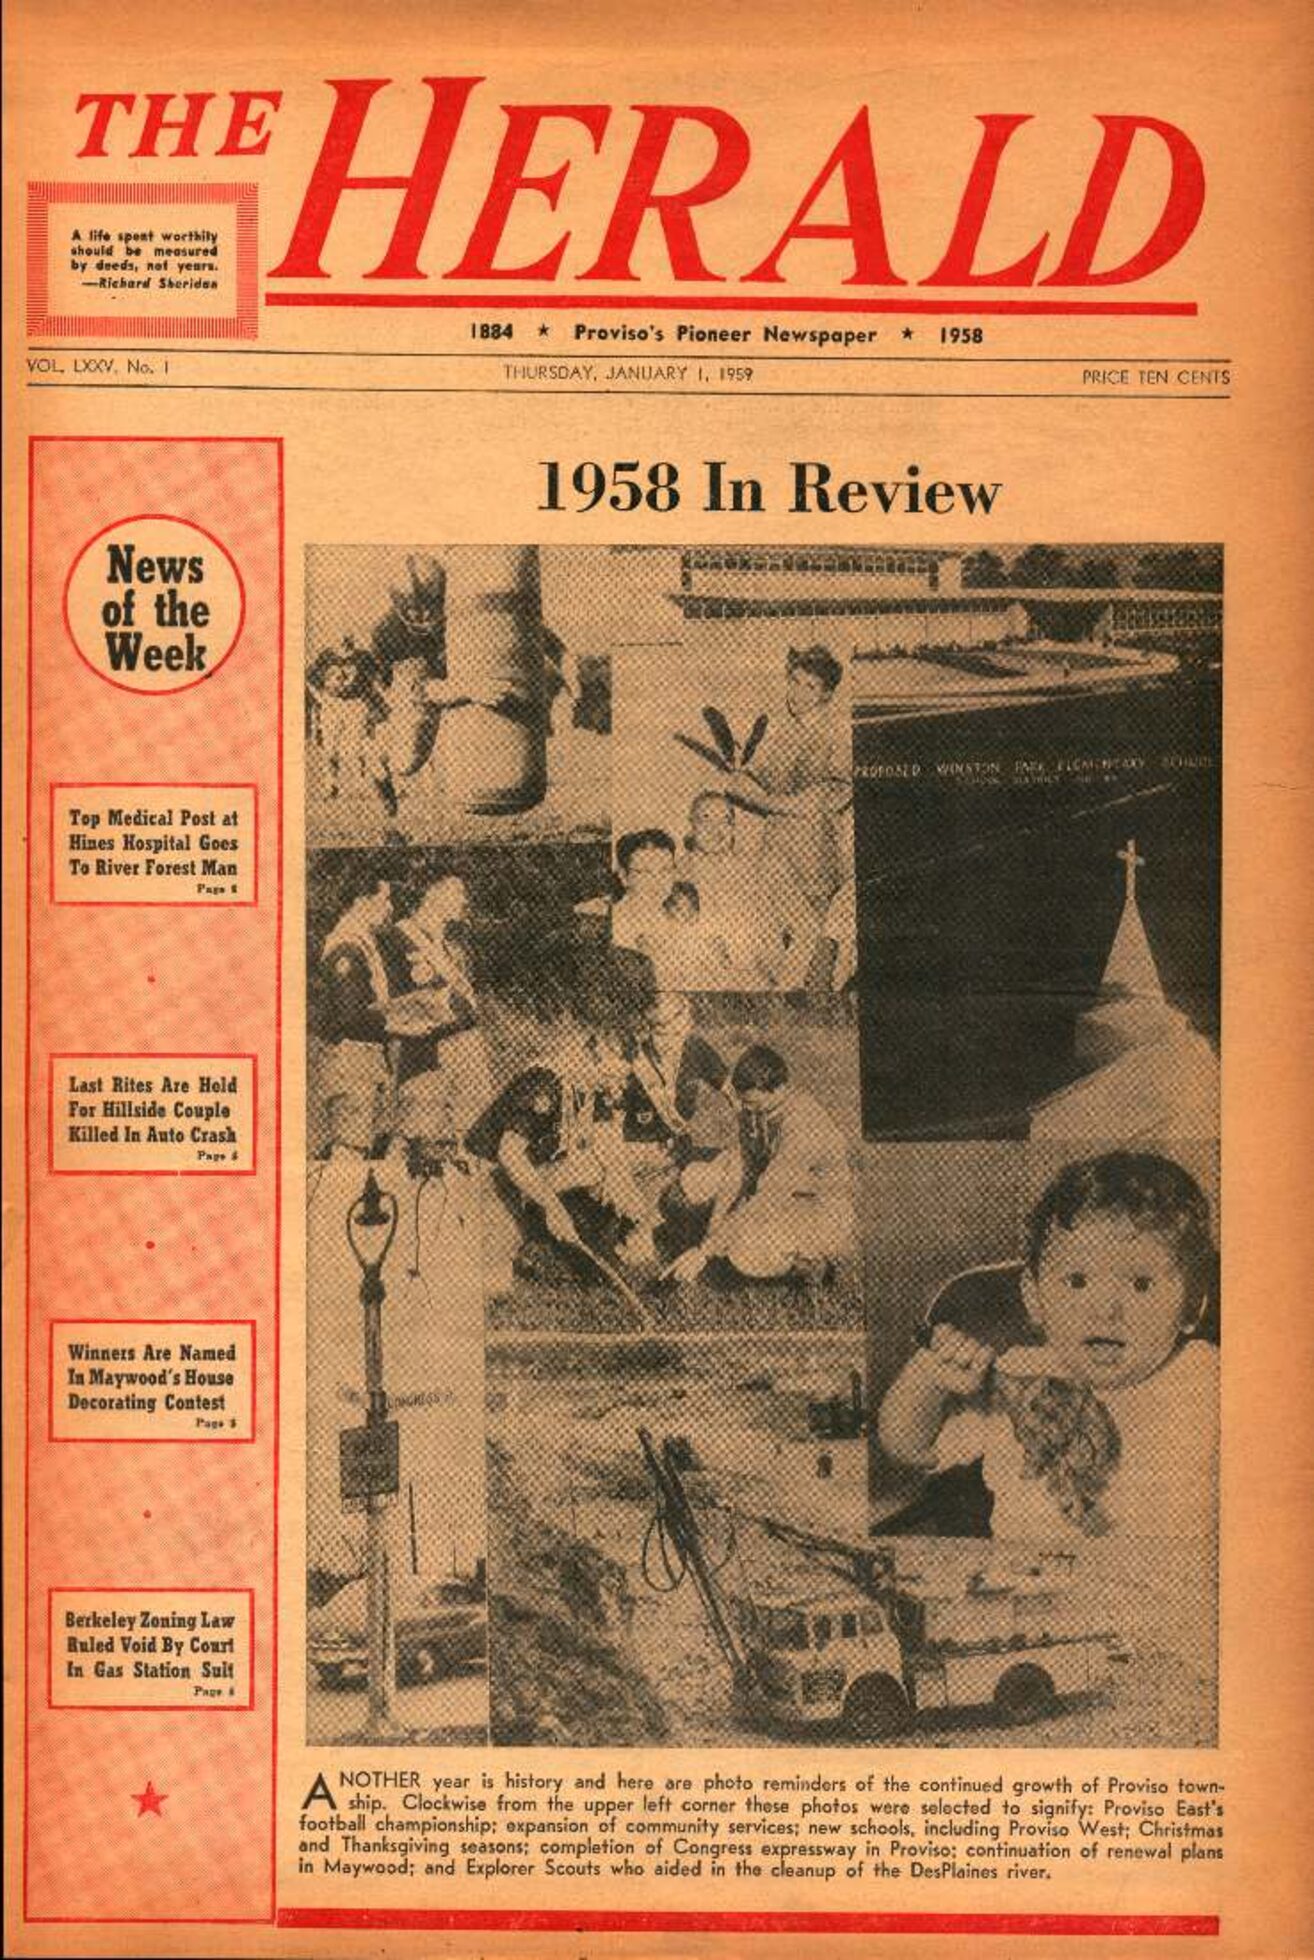 The Herald – 19590101